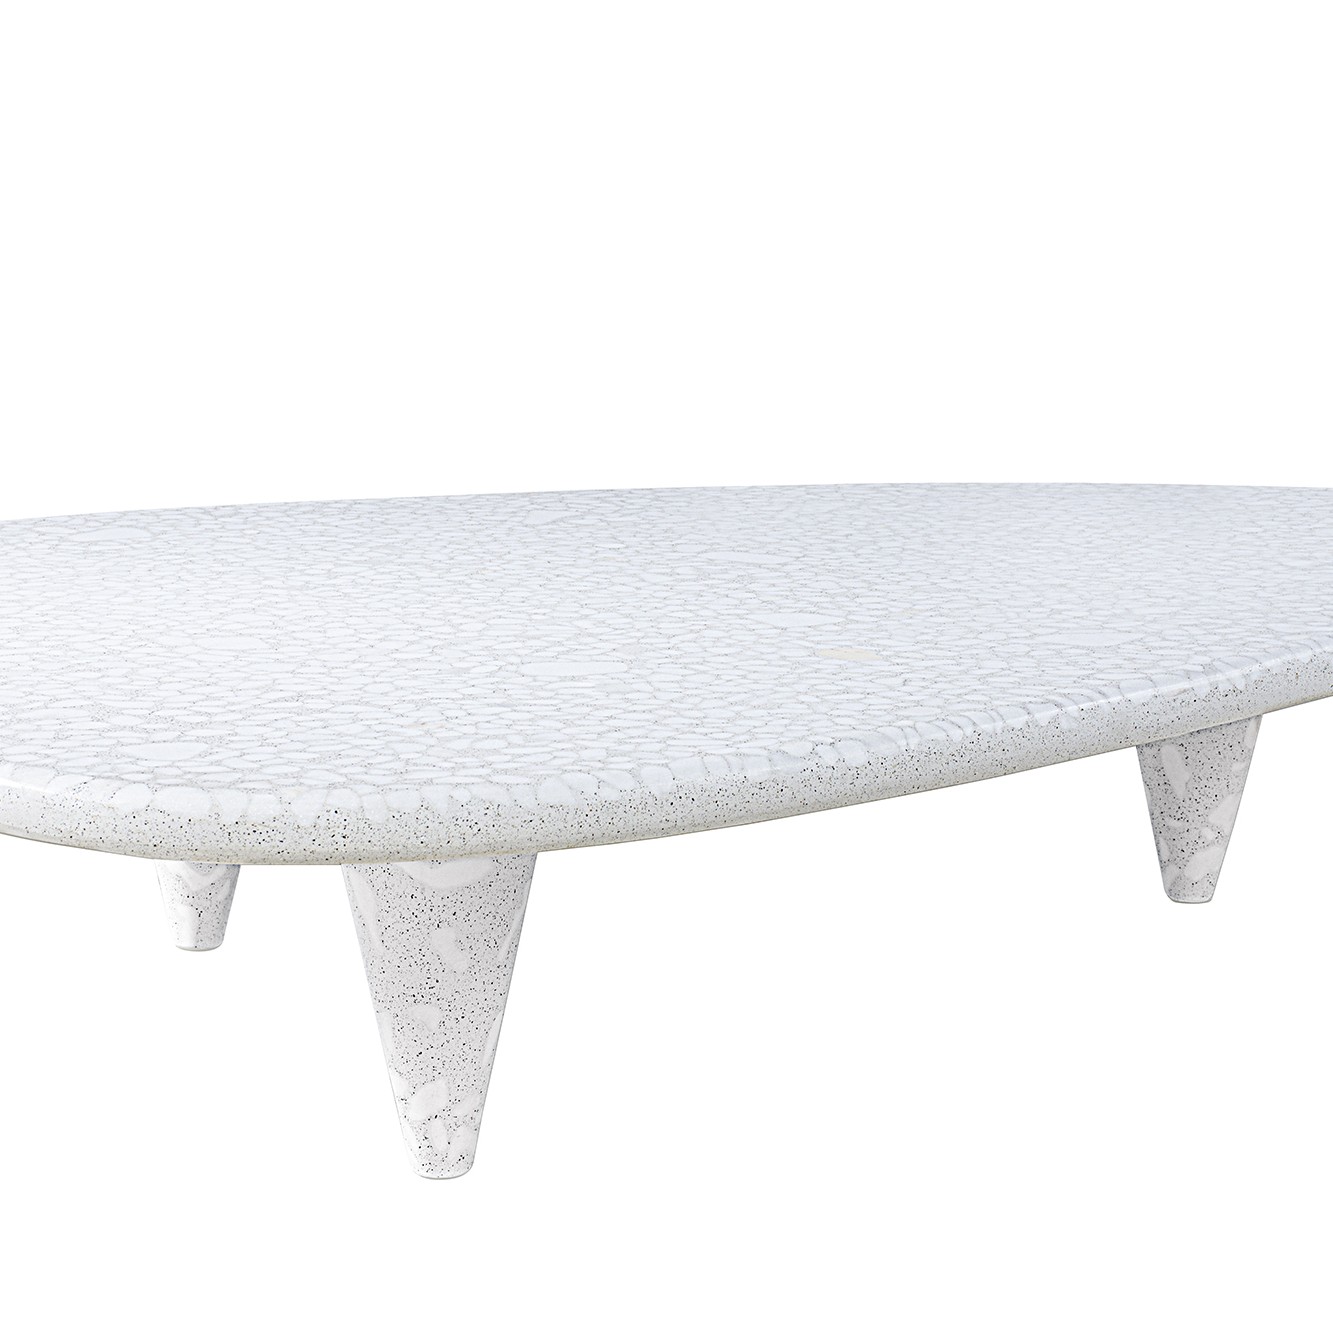 Tria concrete coffee table by urbi et orbi view1